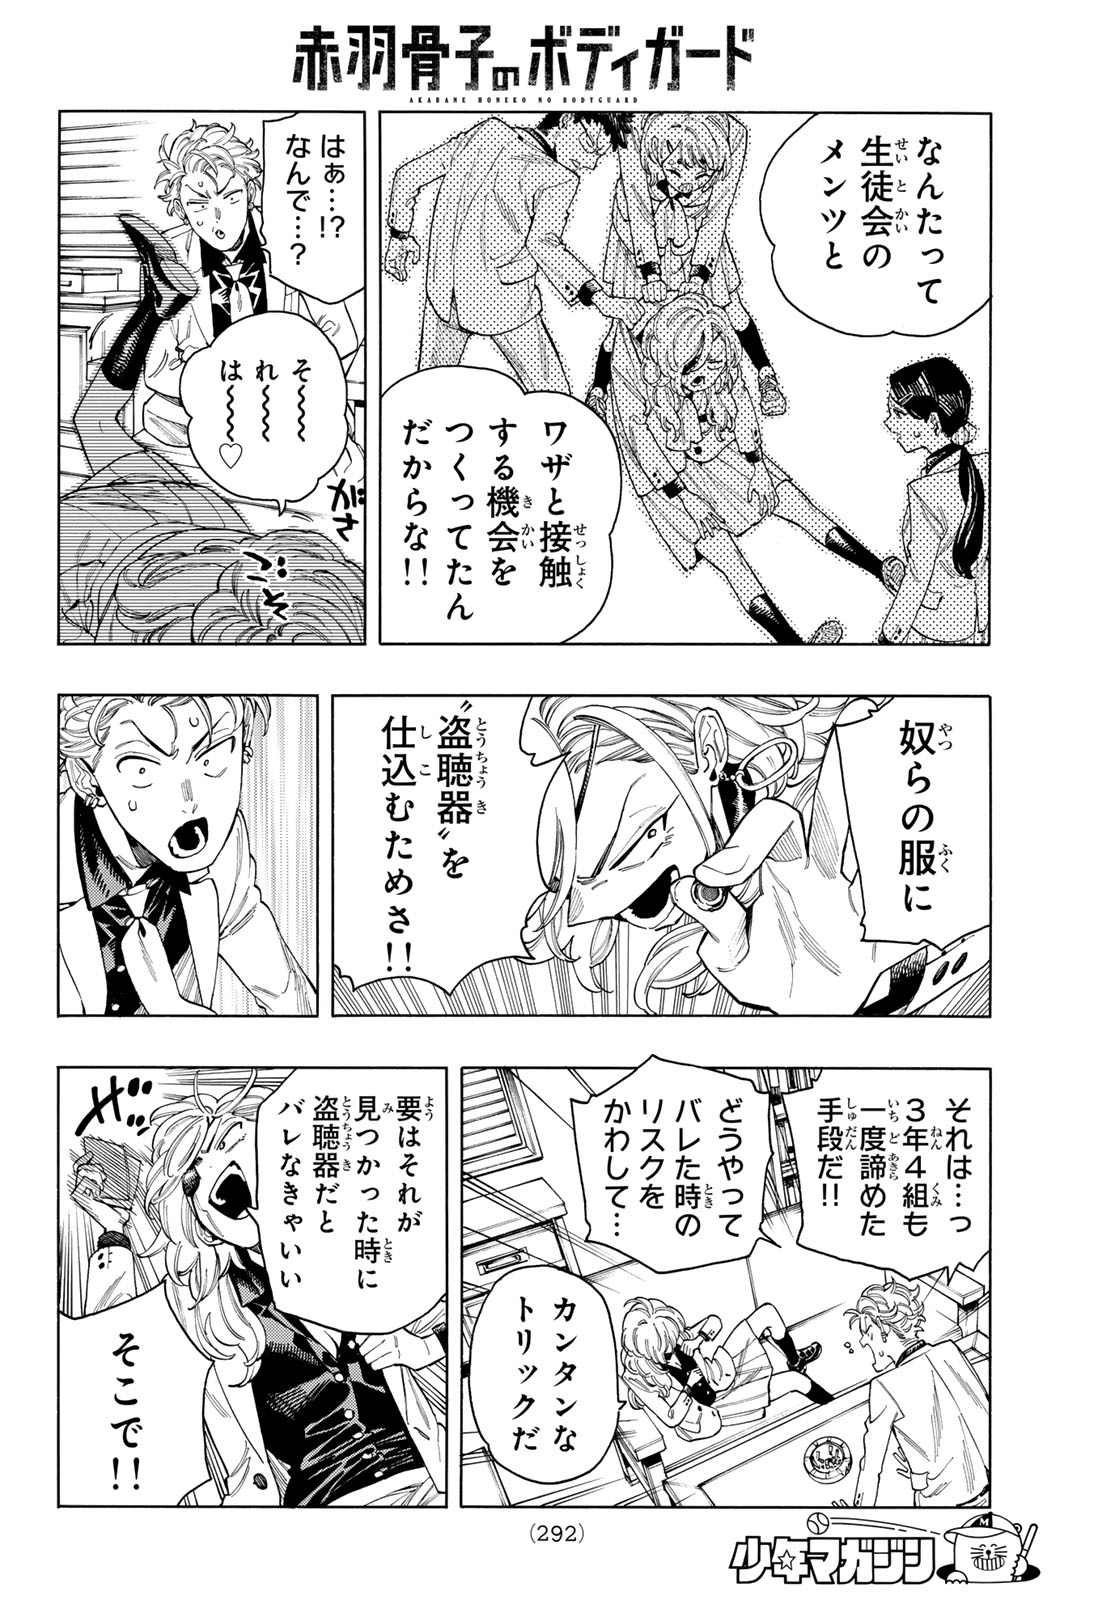 Akabane Honeko no Bodyguard - Chapter 77 - Page 16